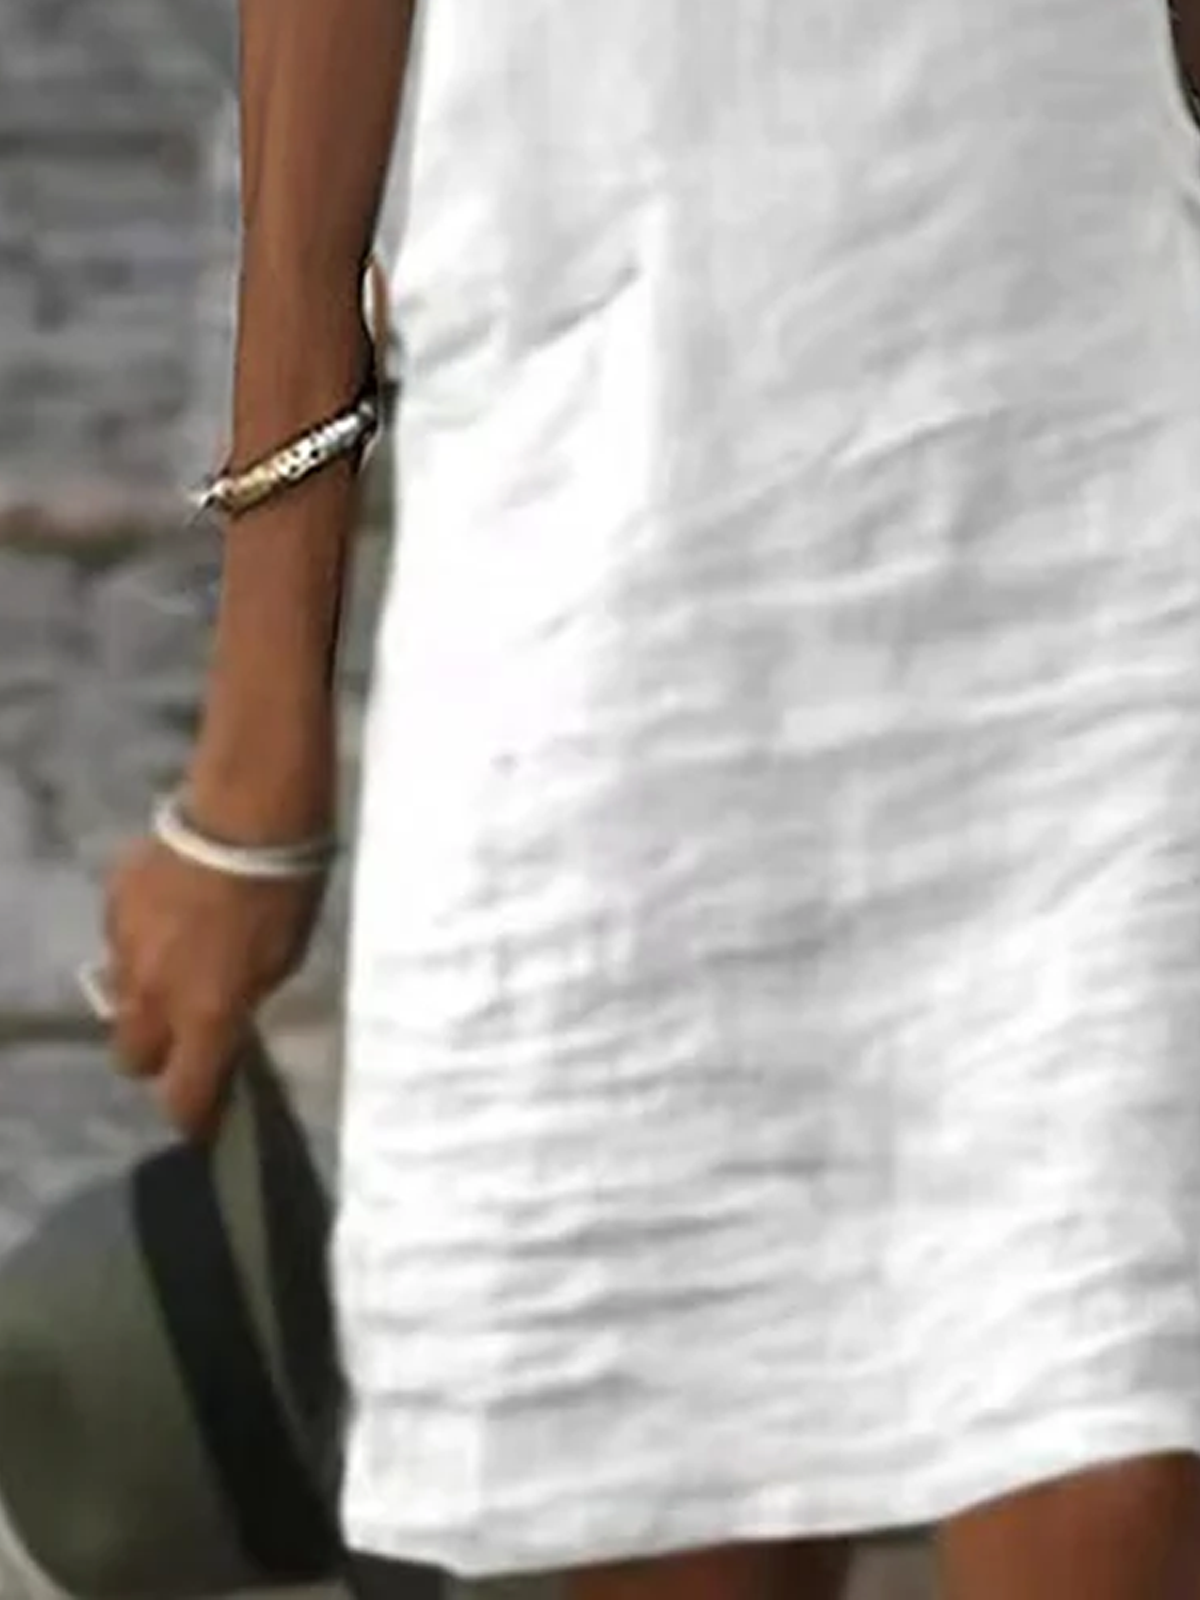 Ladies Short Sleeve Cotton Linen Casual Dress